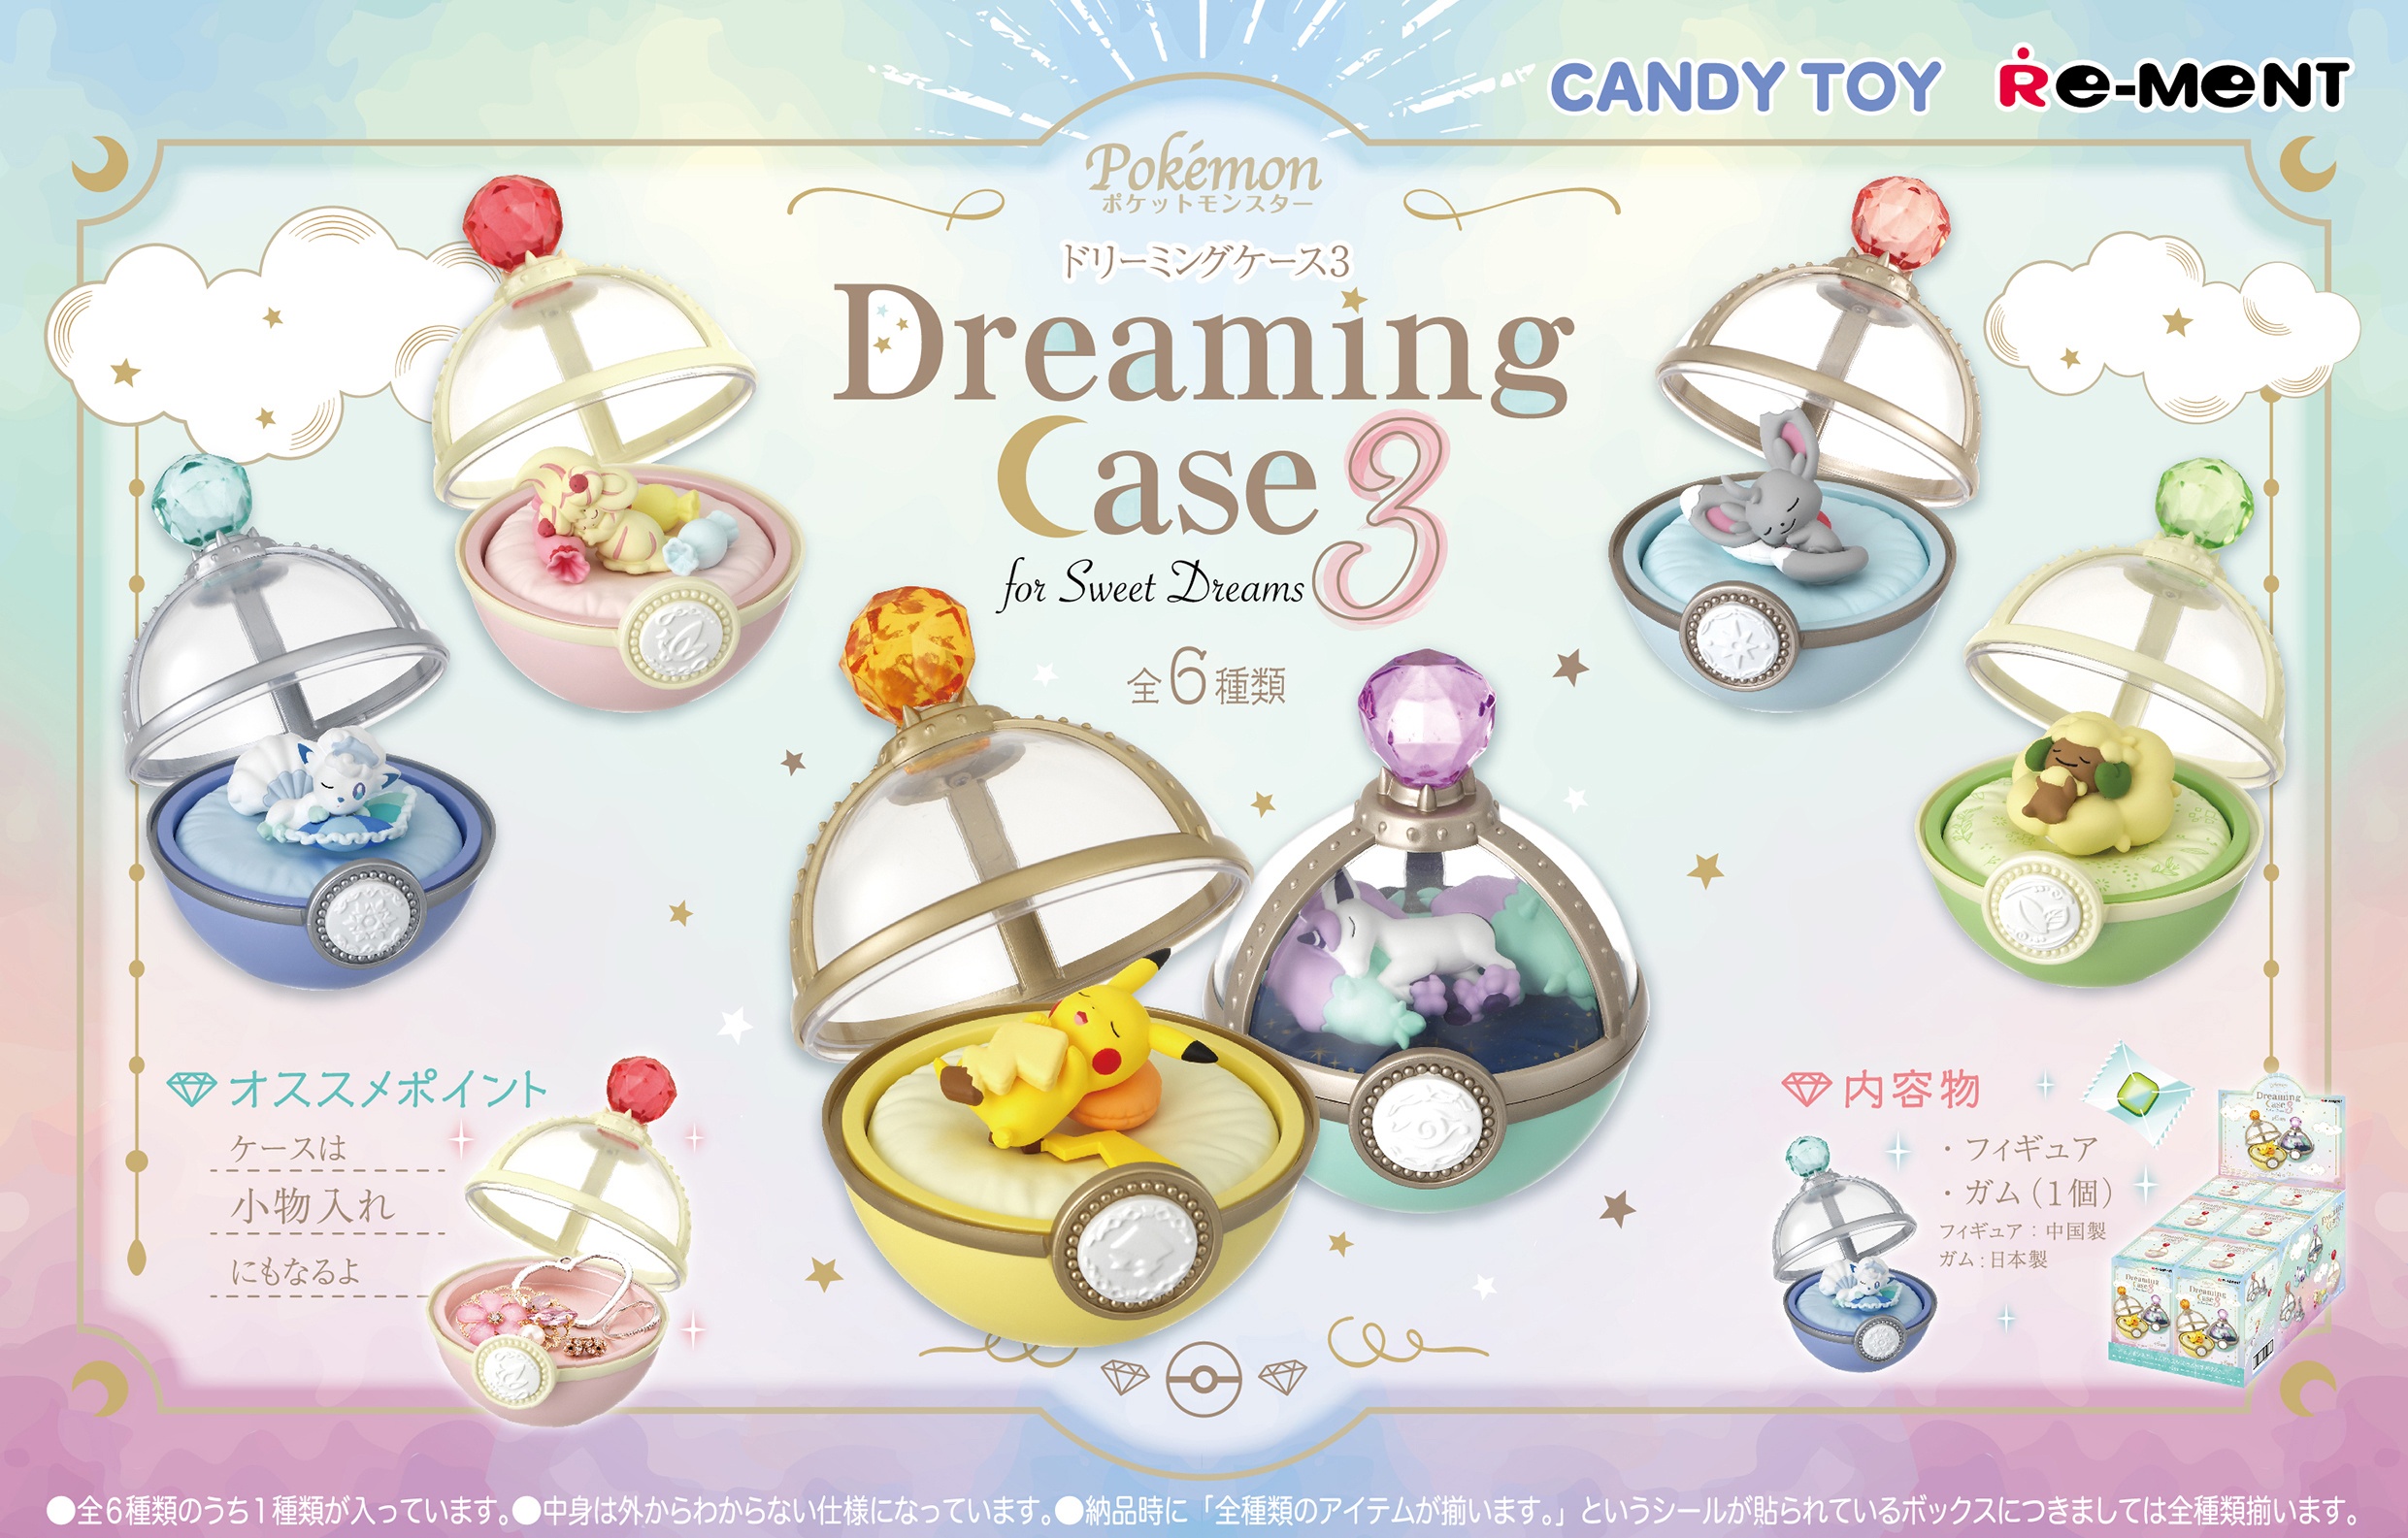 6pcs/set RE-MENT Pokemon Eevee & Friends Dreaming Case 2 Mini Figure New In Box 